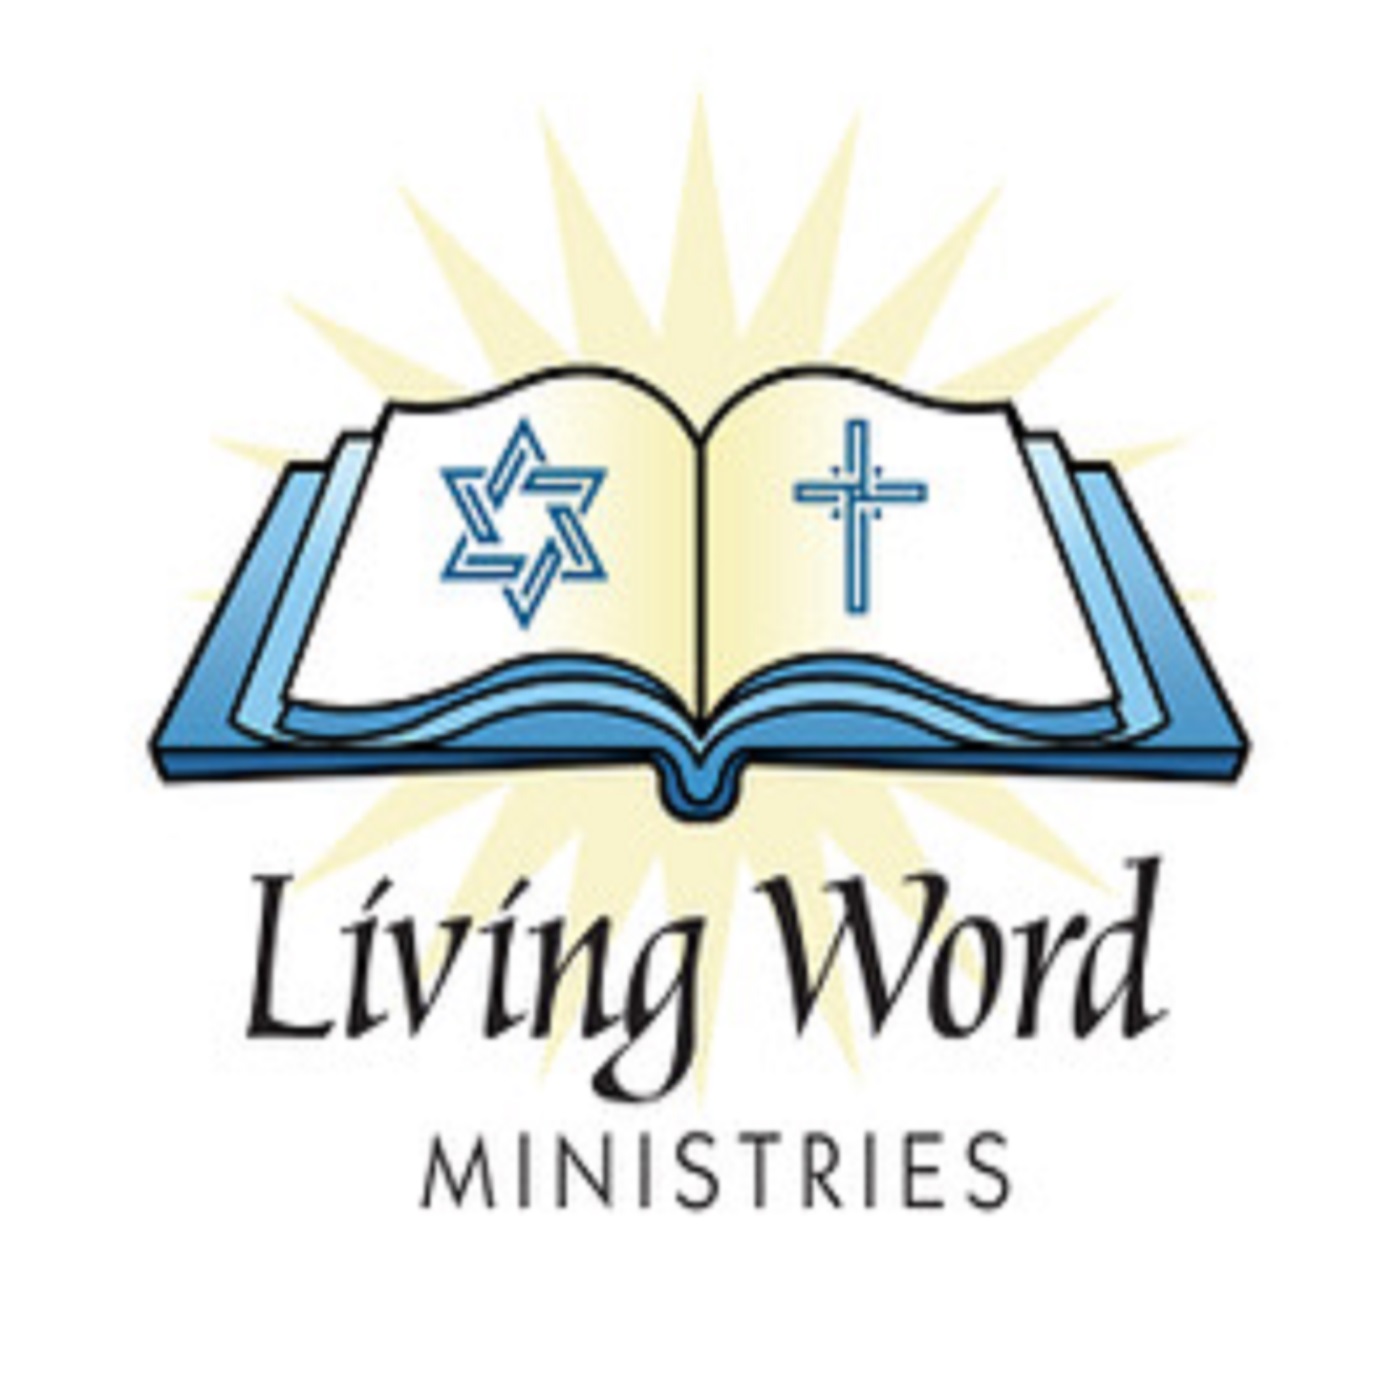 Artwork for Living Word Ministries